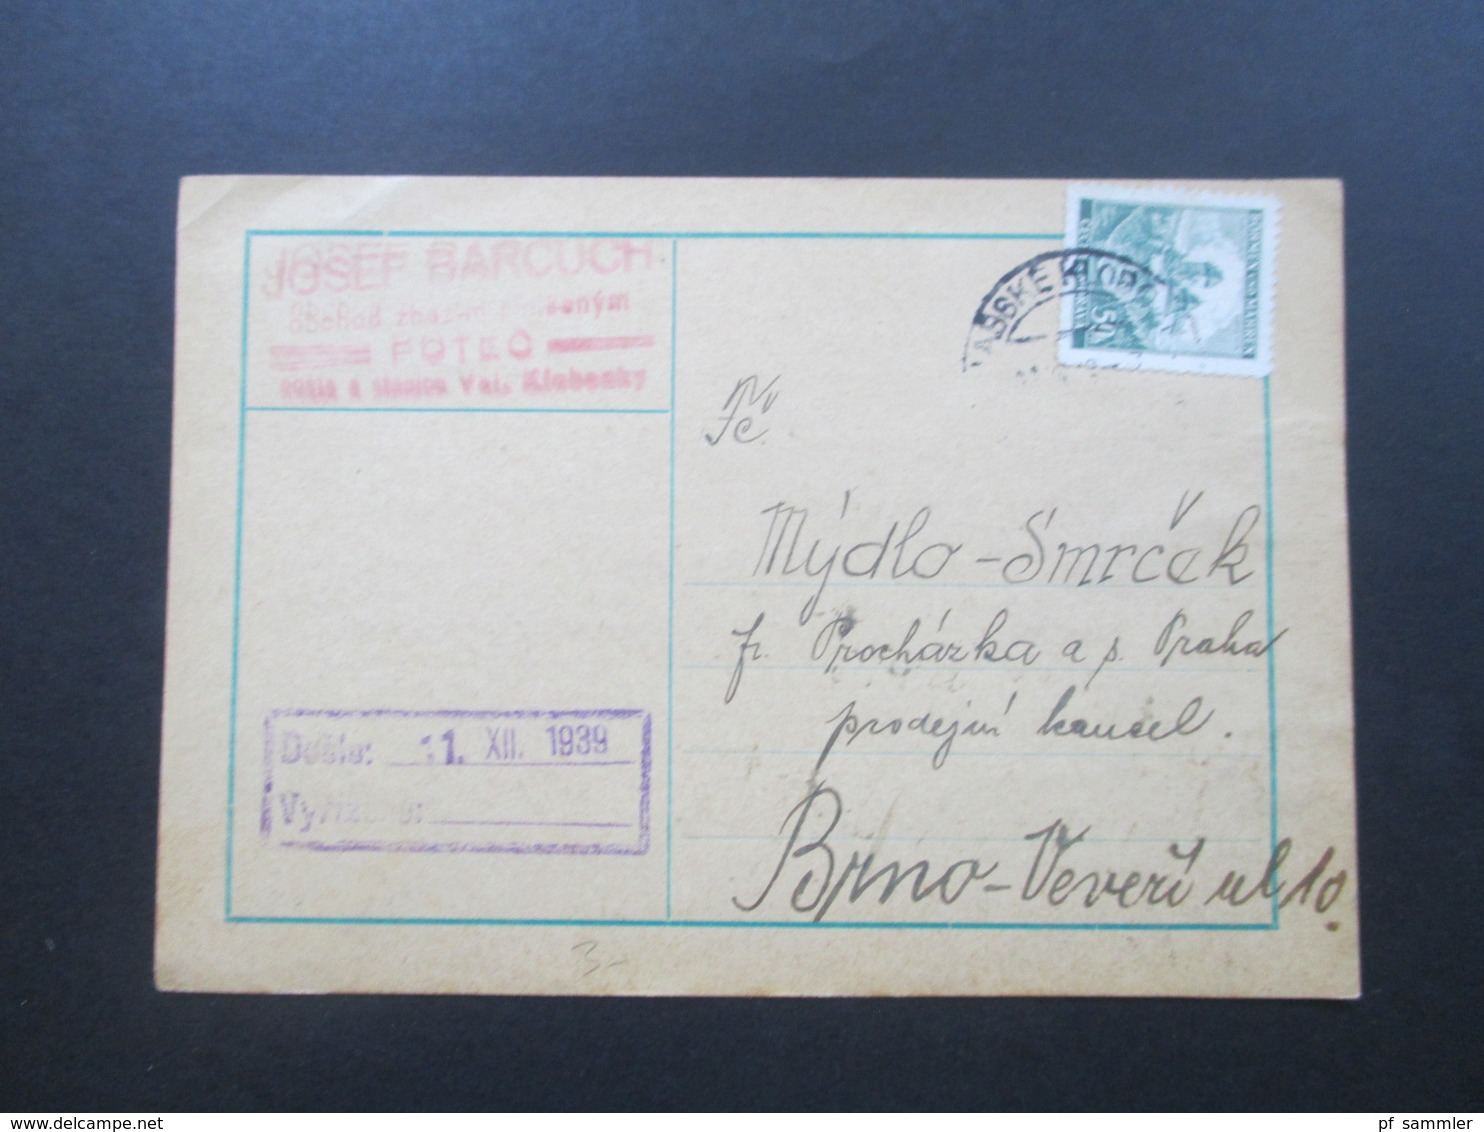 Böhmen Und Mähren 1939 Postkarte Firmenkarte Josef Barcuch Potec. Interessante Karte! - Covers & Documents